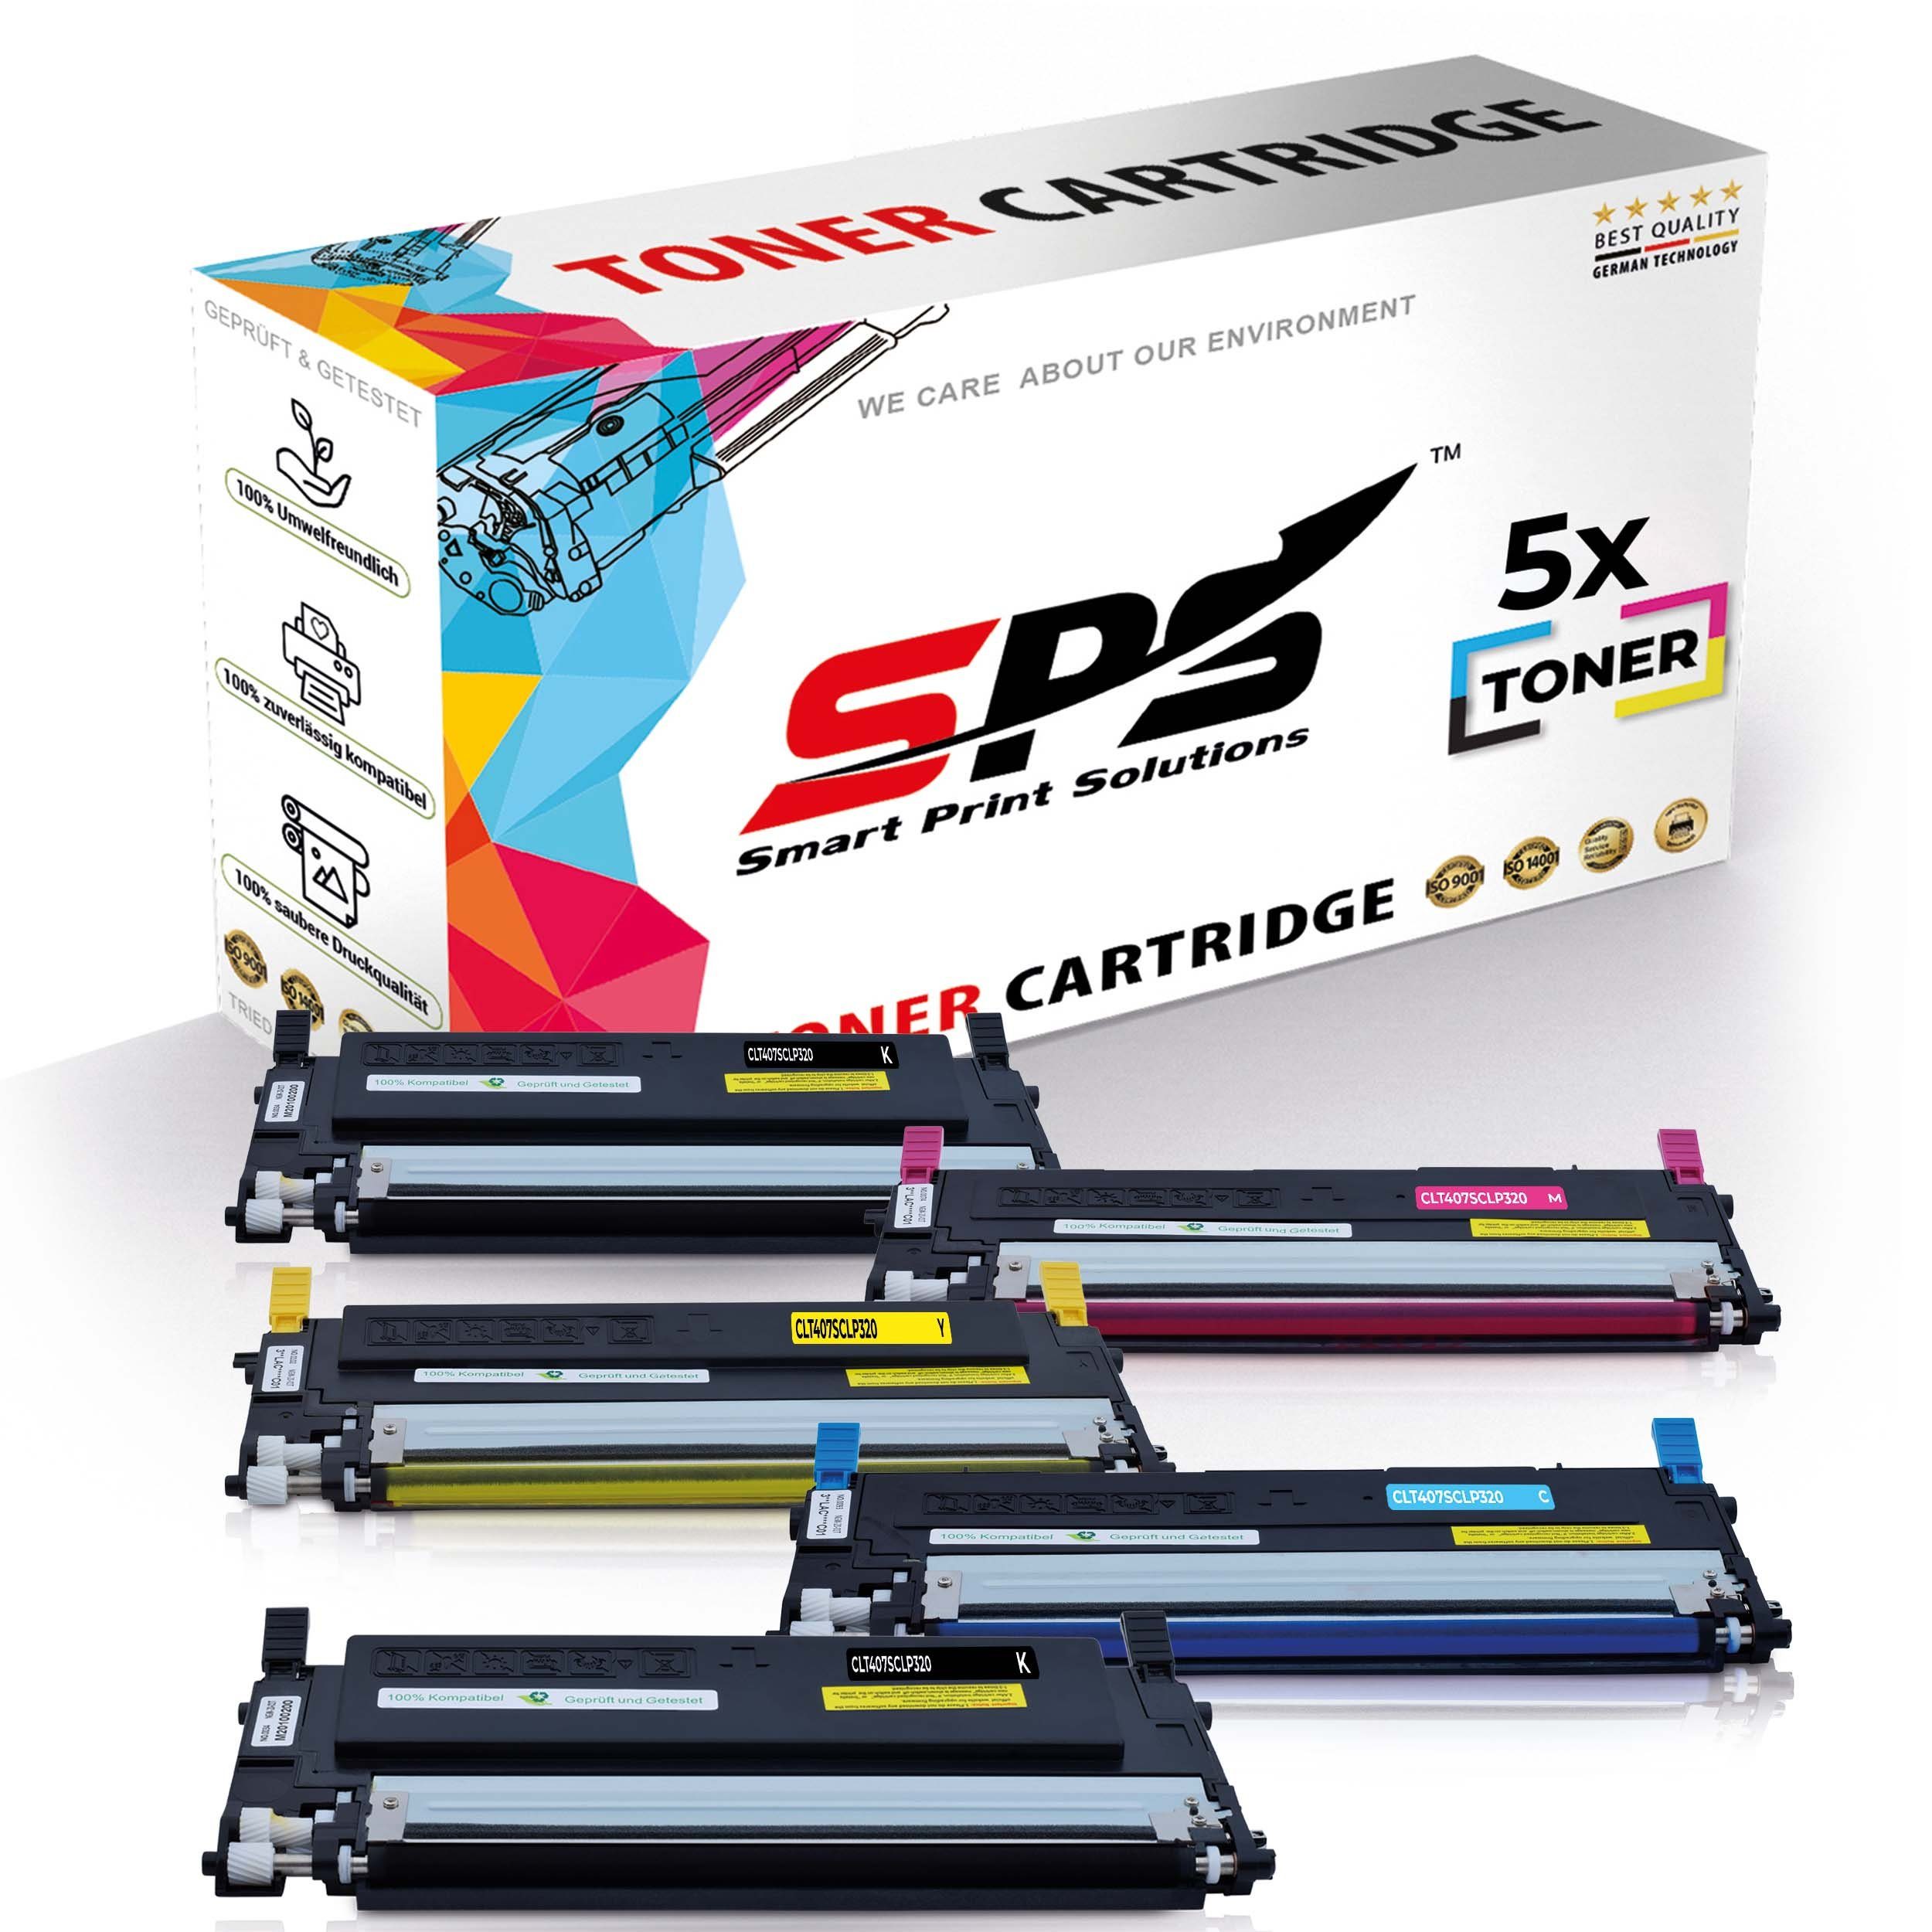 SPS Tonerkartusche 5x Multipack Set Kompatibel für Samsung CLP 325 N, (5er Pack, 5x Toner)